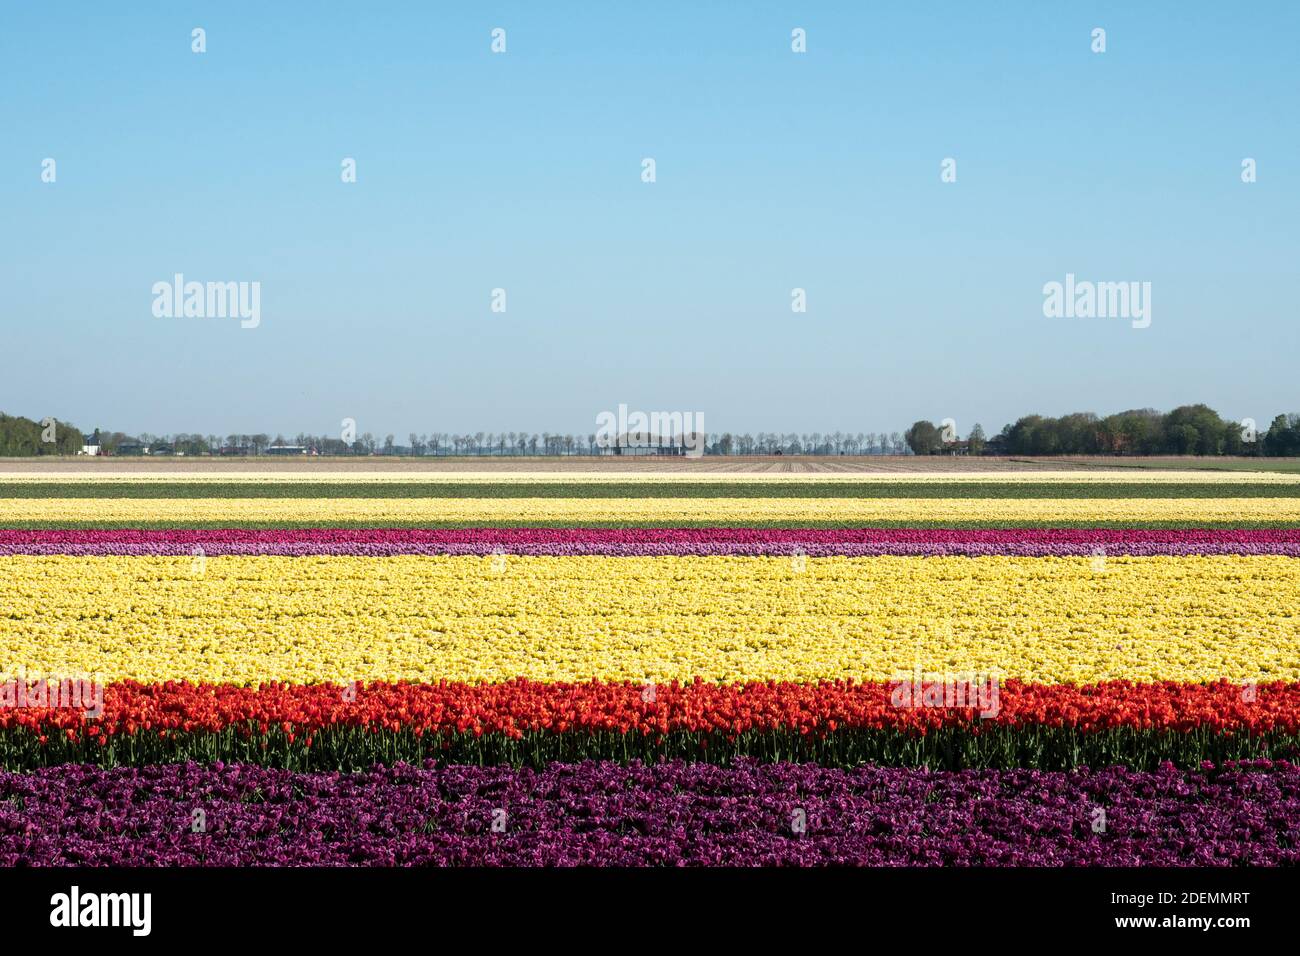 Bulb fields in the Noordoost polder in the Netherlands Stock Photo